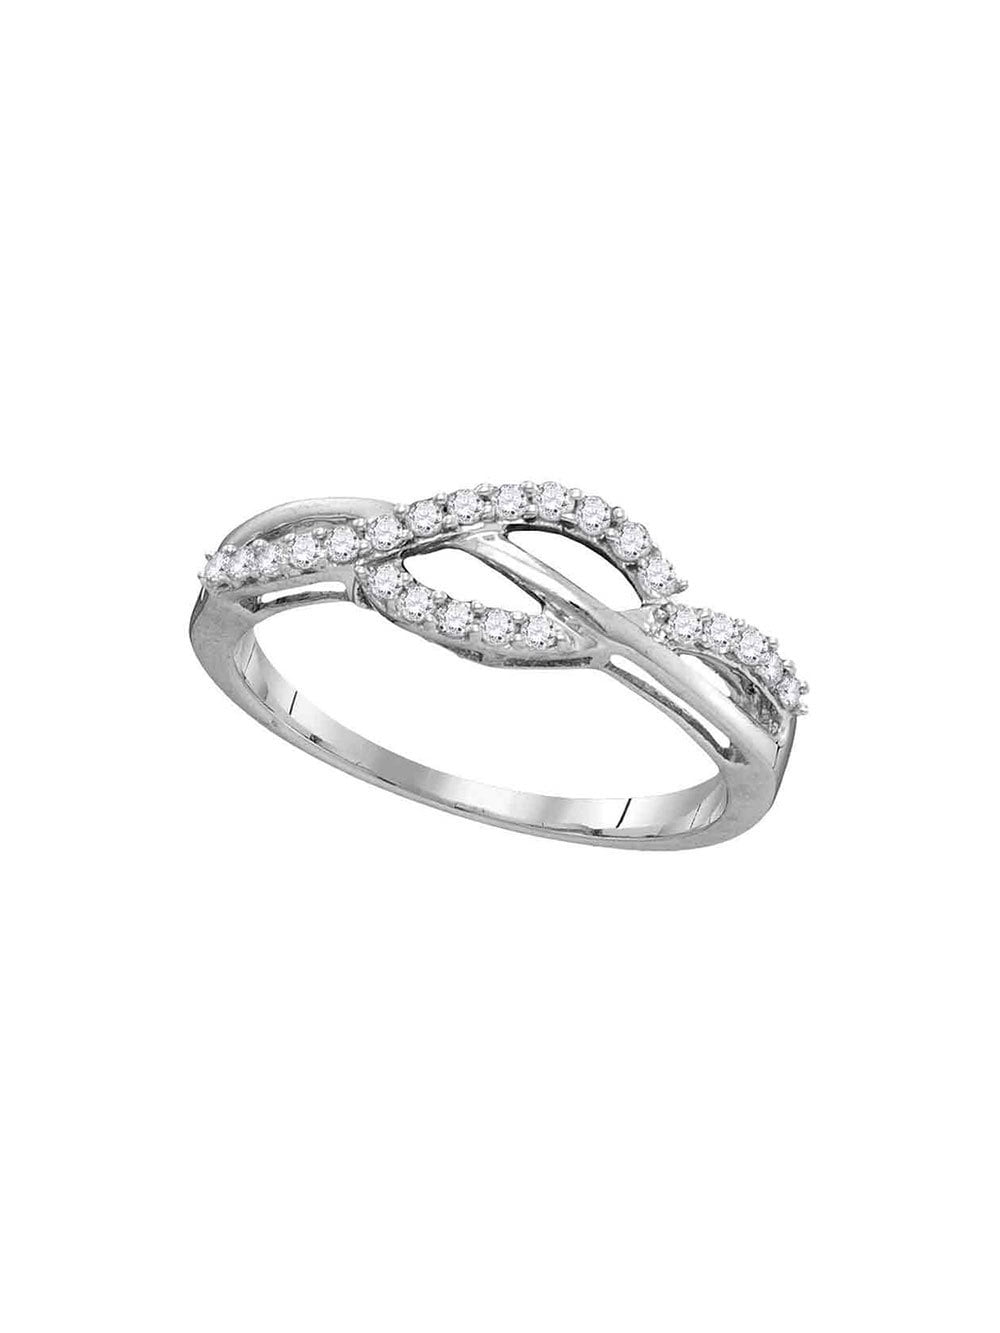 Diamond Woven Fashion Band Ring 1/20ct 10k White Gold 